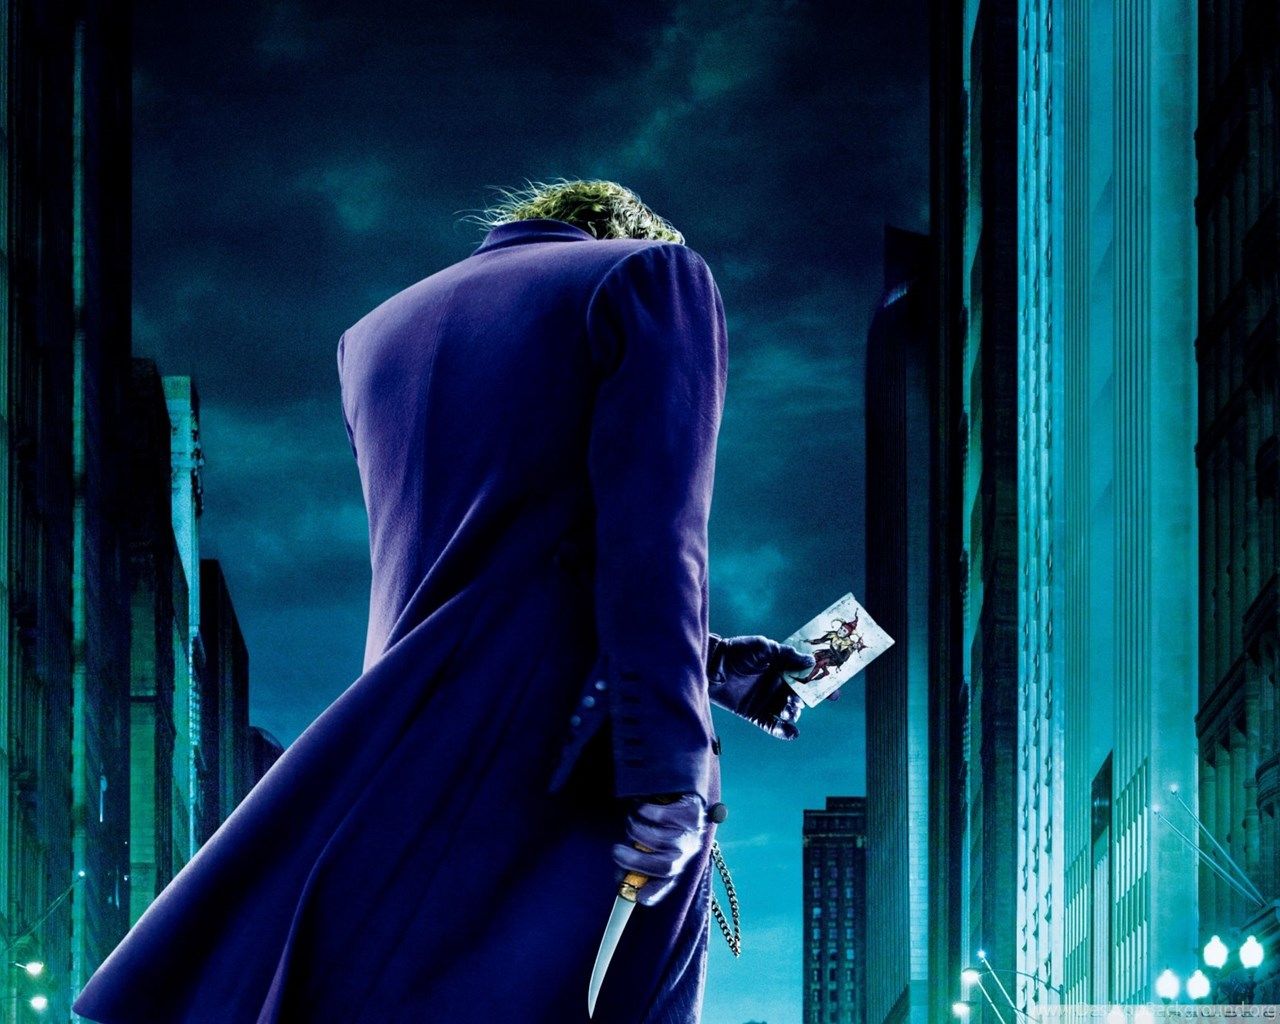 The Joker The Dark Knight HD Desktop Wallpaper, High Definition